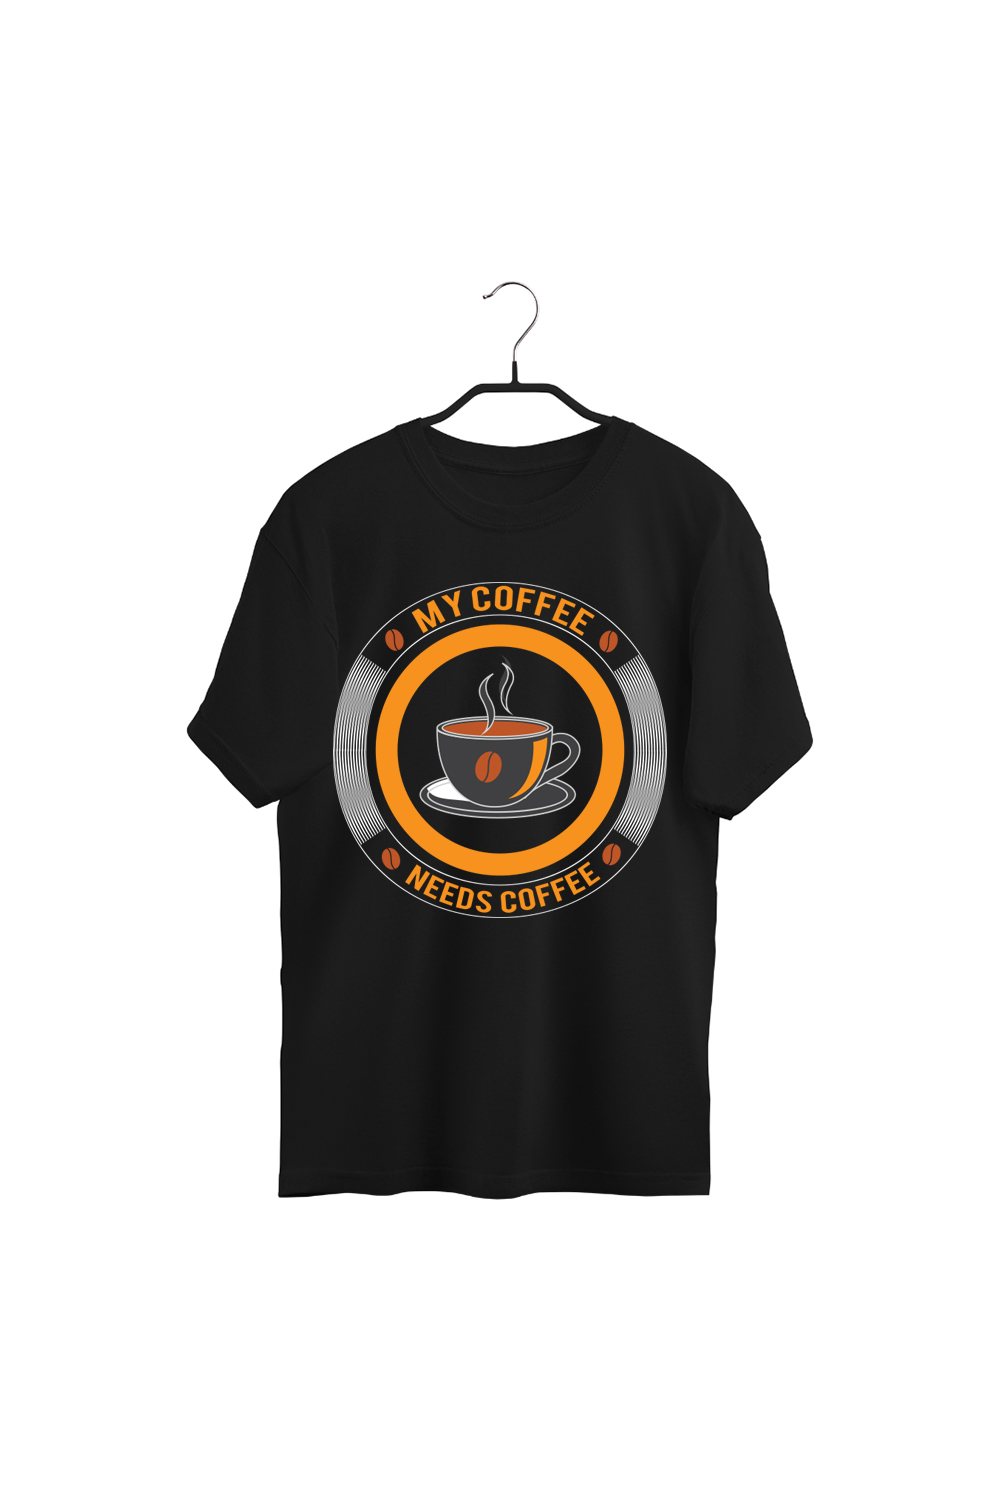 Coffee T-shirt Design pinterest image.